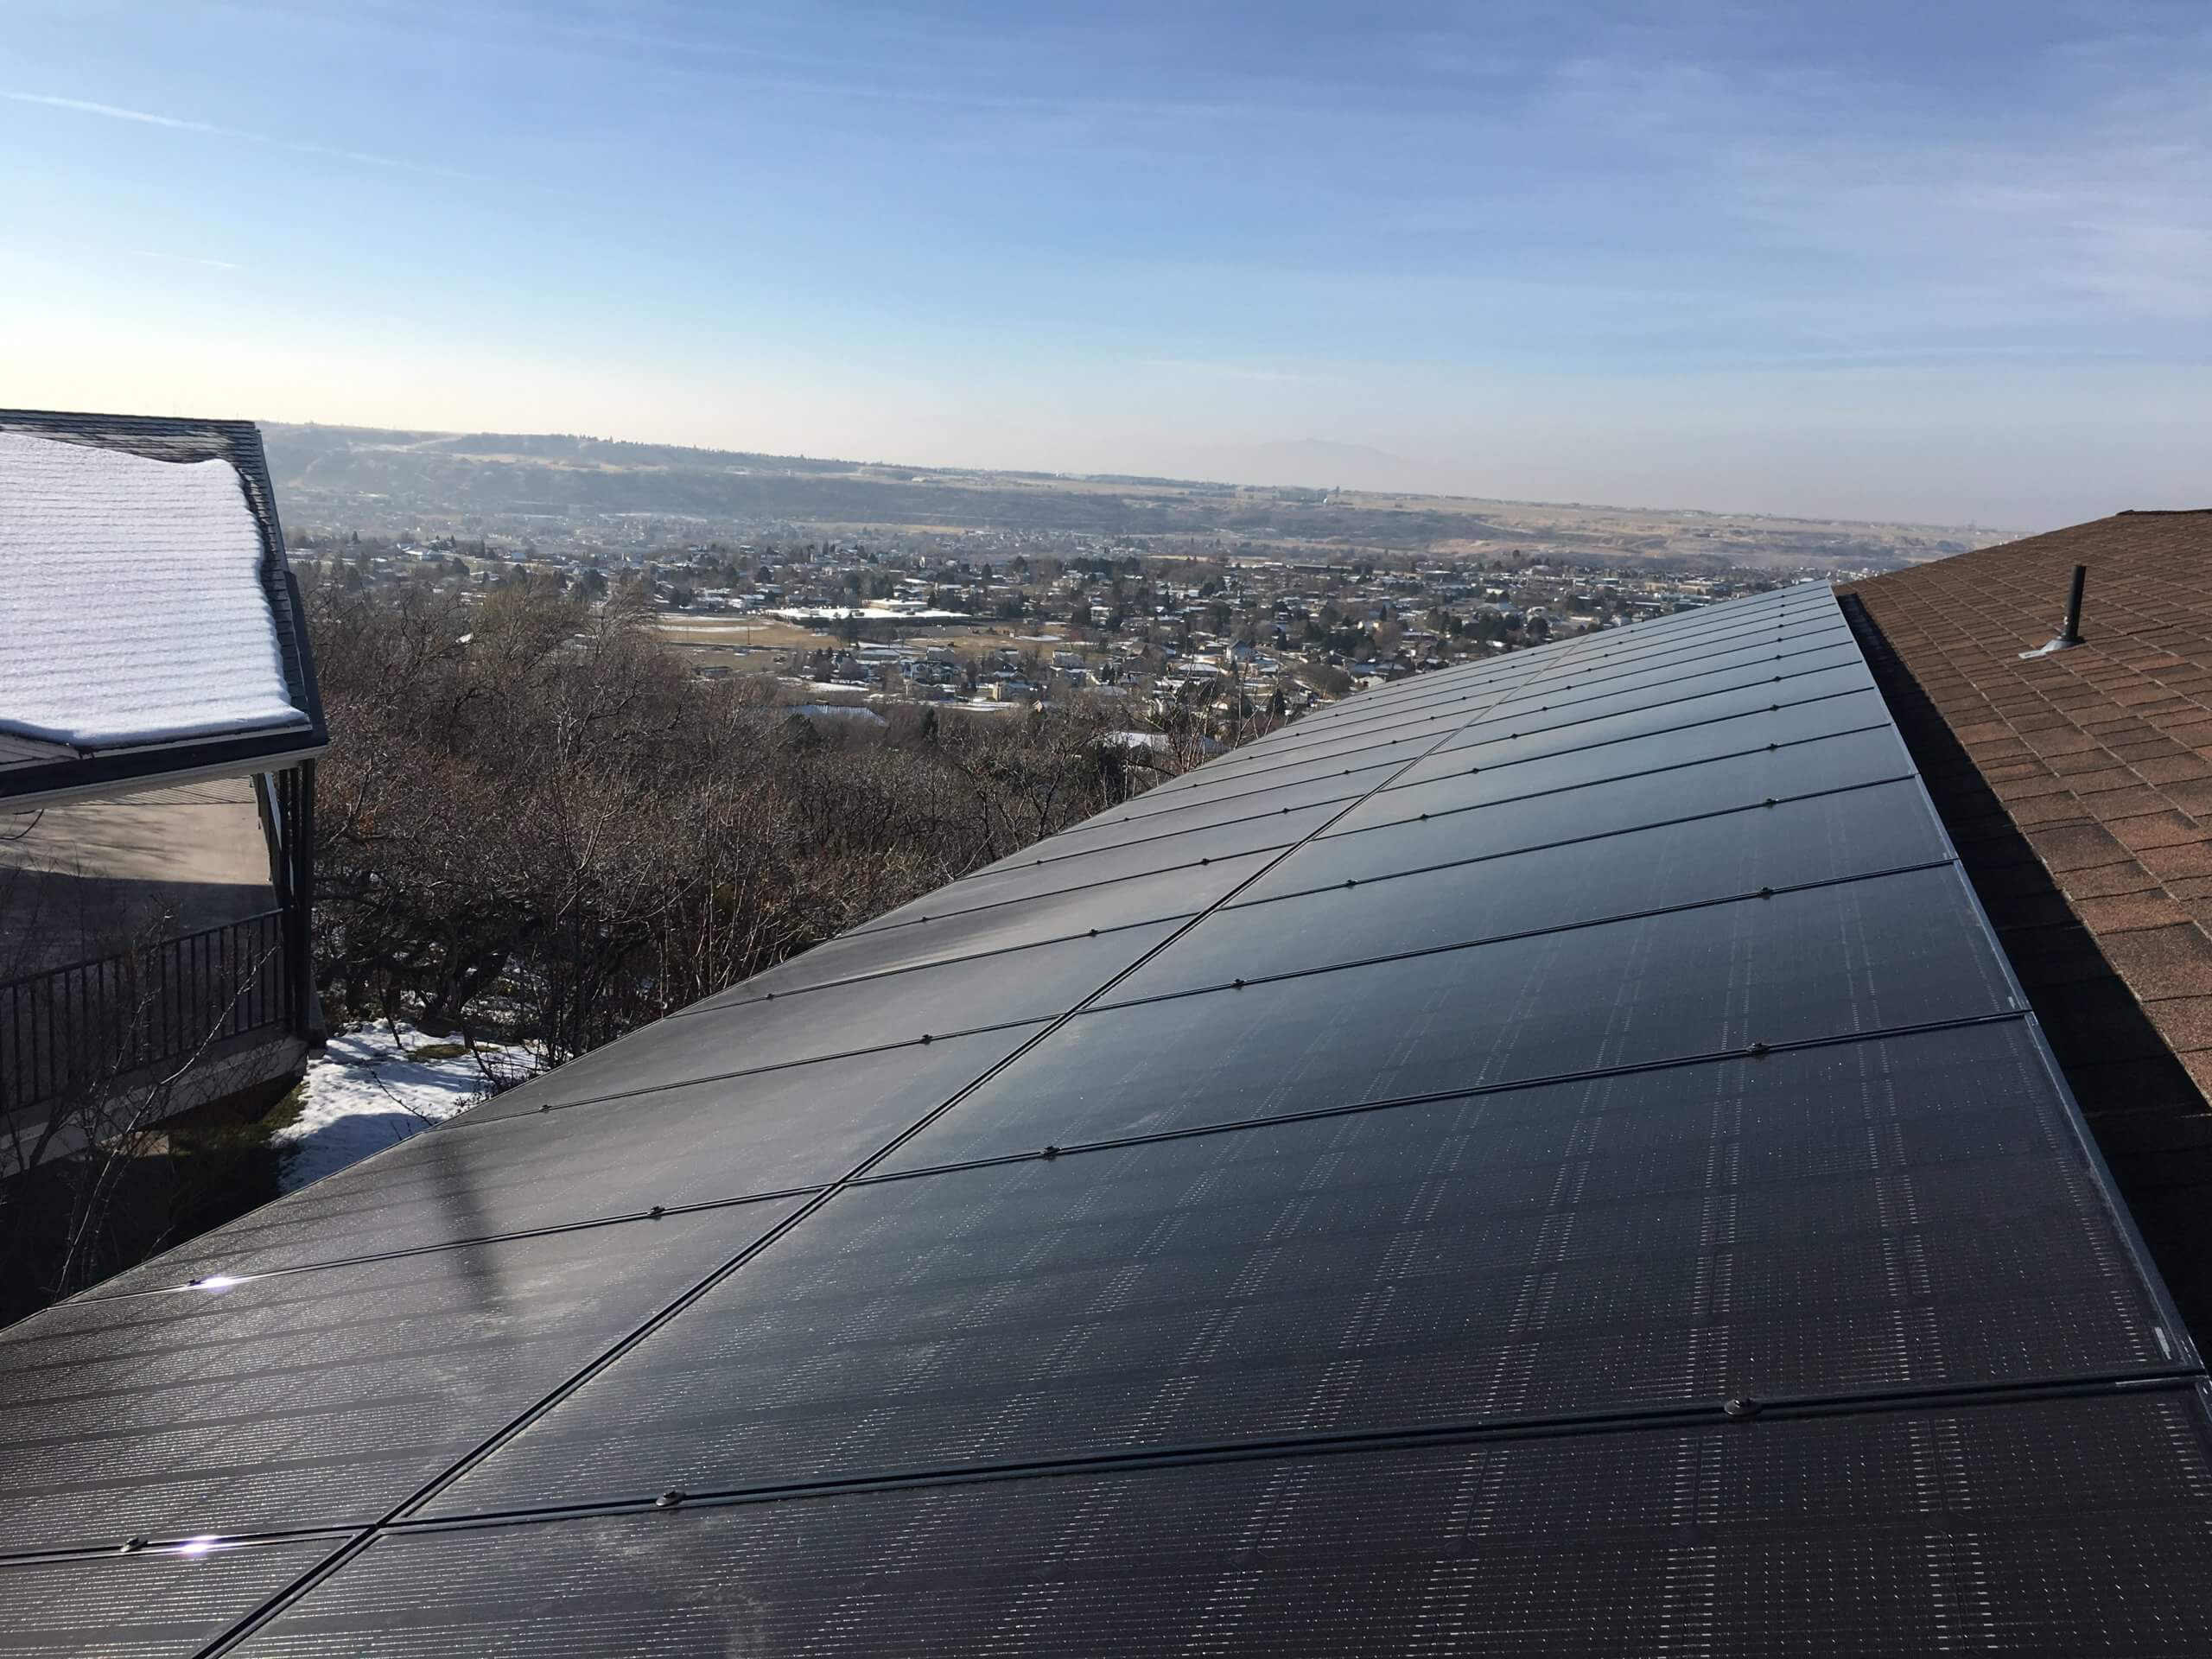 redstone-solar-weber-county-ogden-solar-panel-installation-lg-320n1k-a5-solar-module-solaredge-p320-power-optimizer